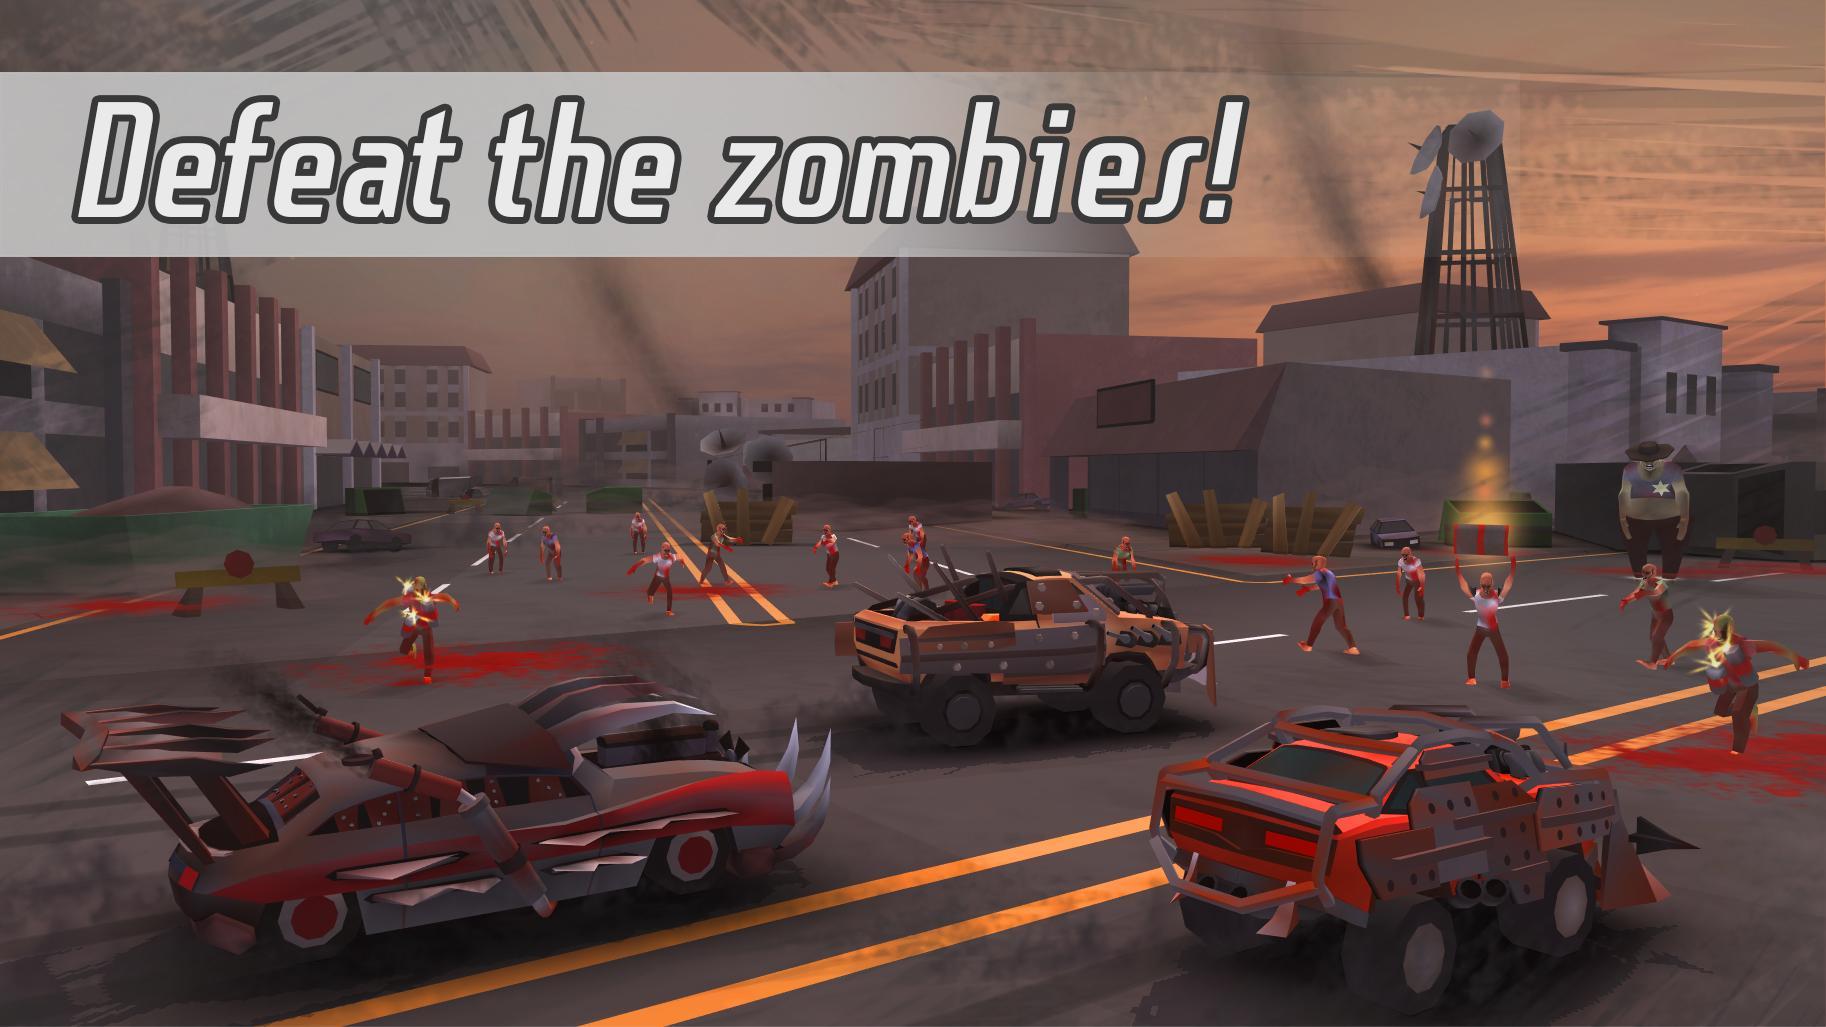 Evil Car Zombie Apocalypse For Android Apk Download - roblox zombie apocalypse cars